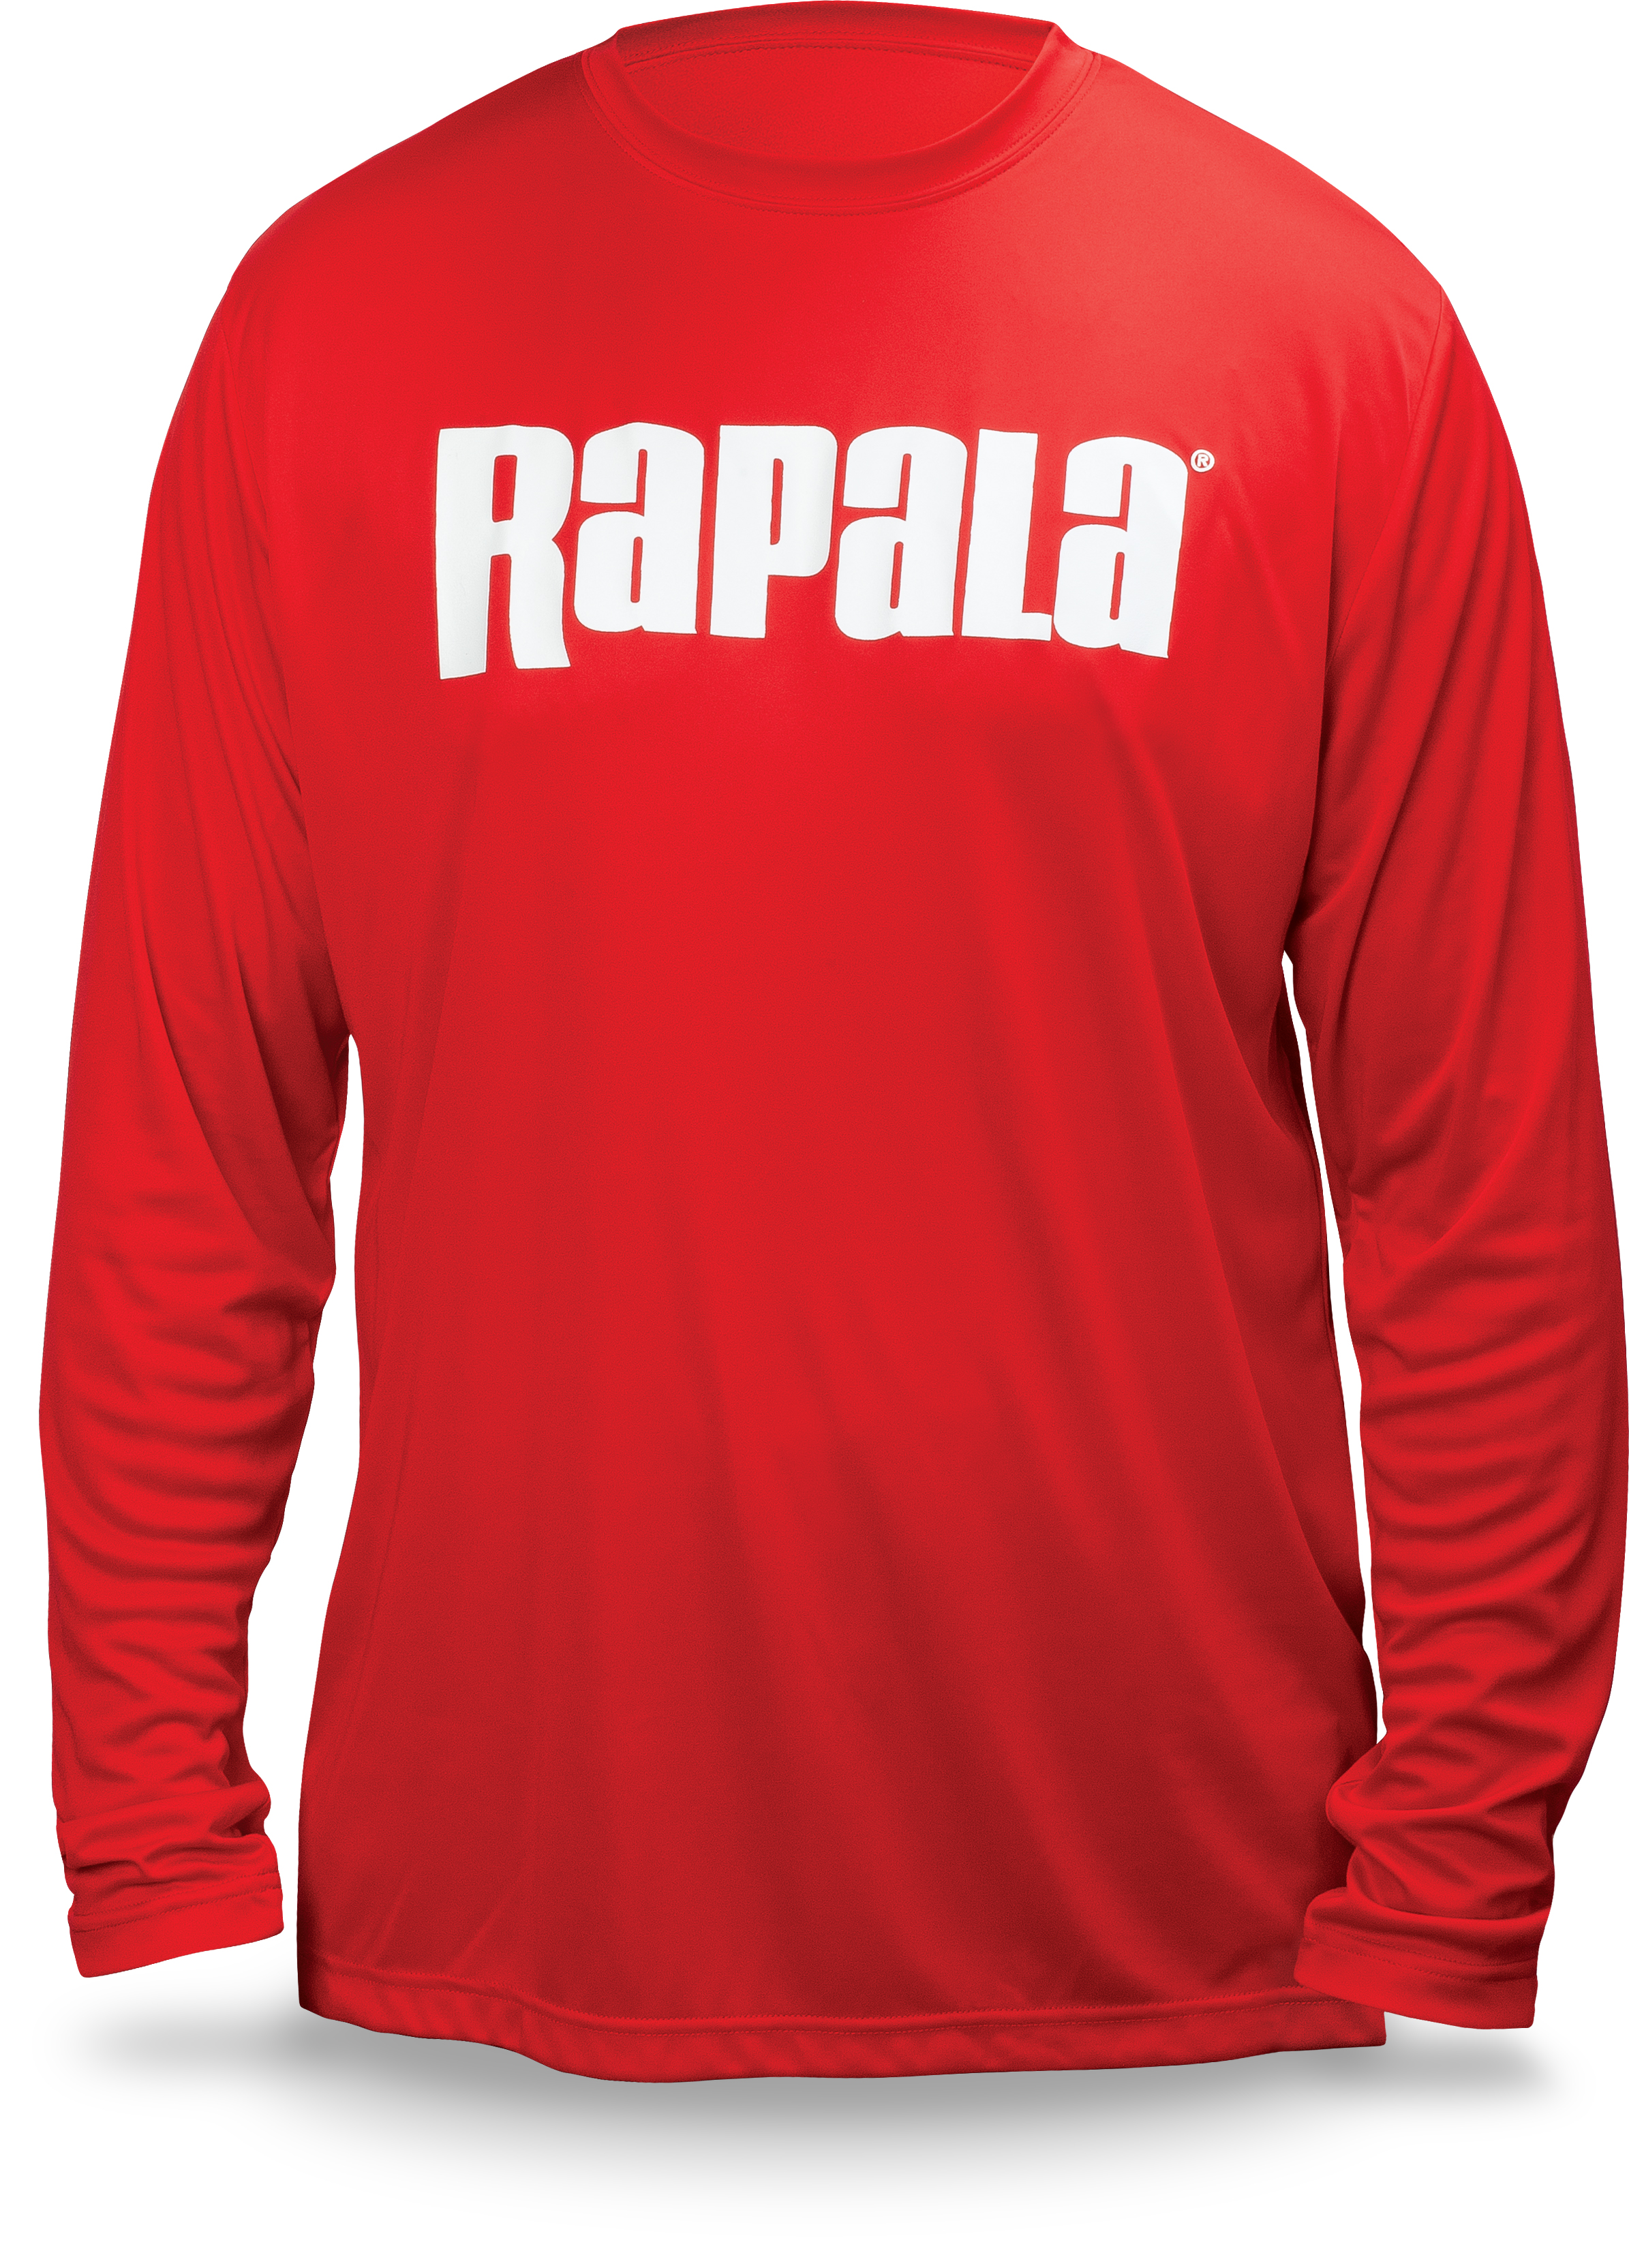 Rapala Long Sleeve Microfiber UPF Fishing Shirt 